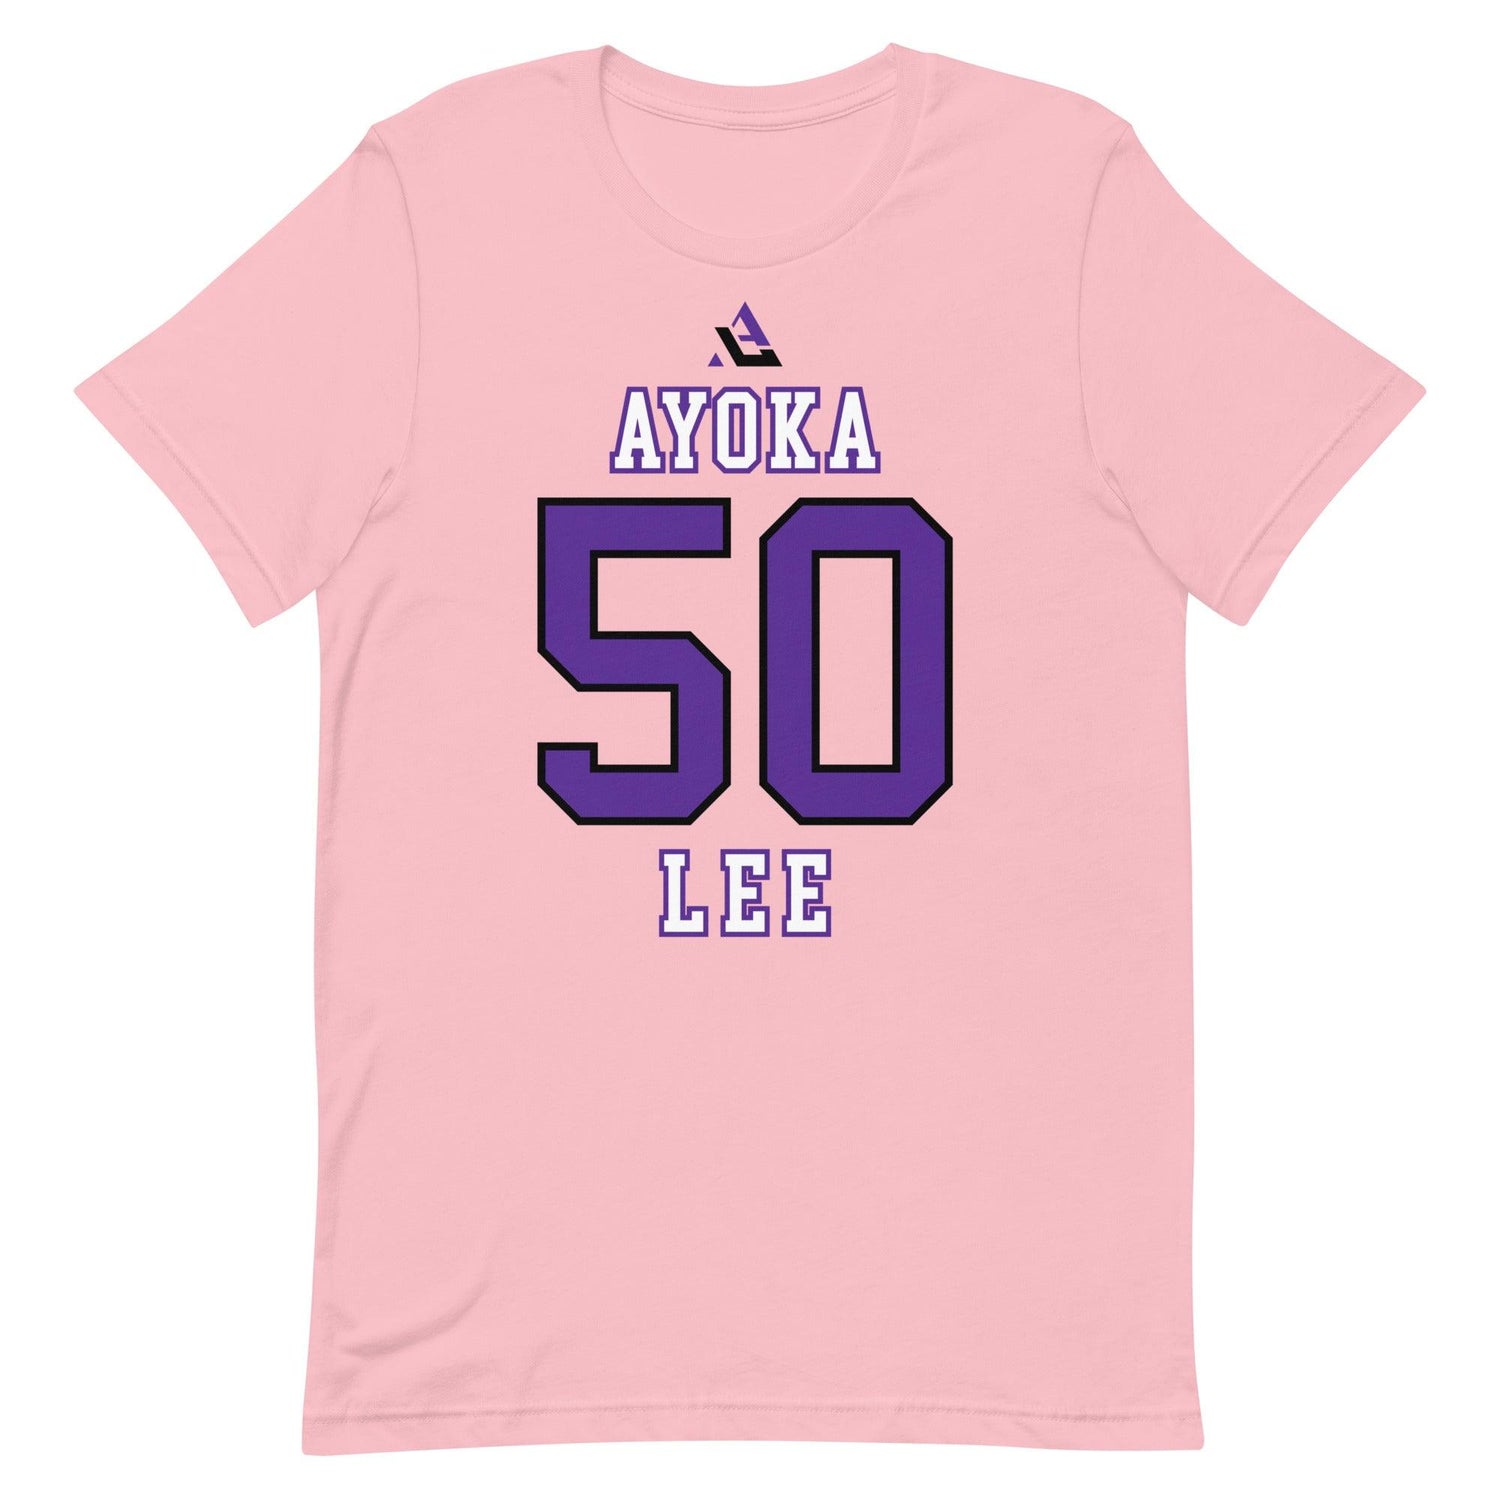 Ayoka Lee "Jersey" t-shirt - Fan Arch